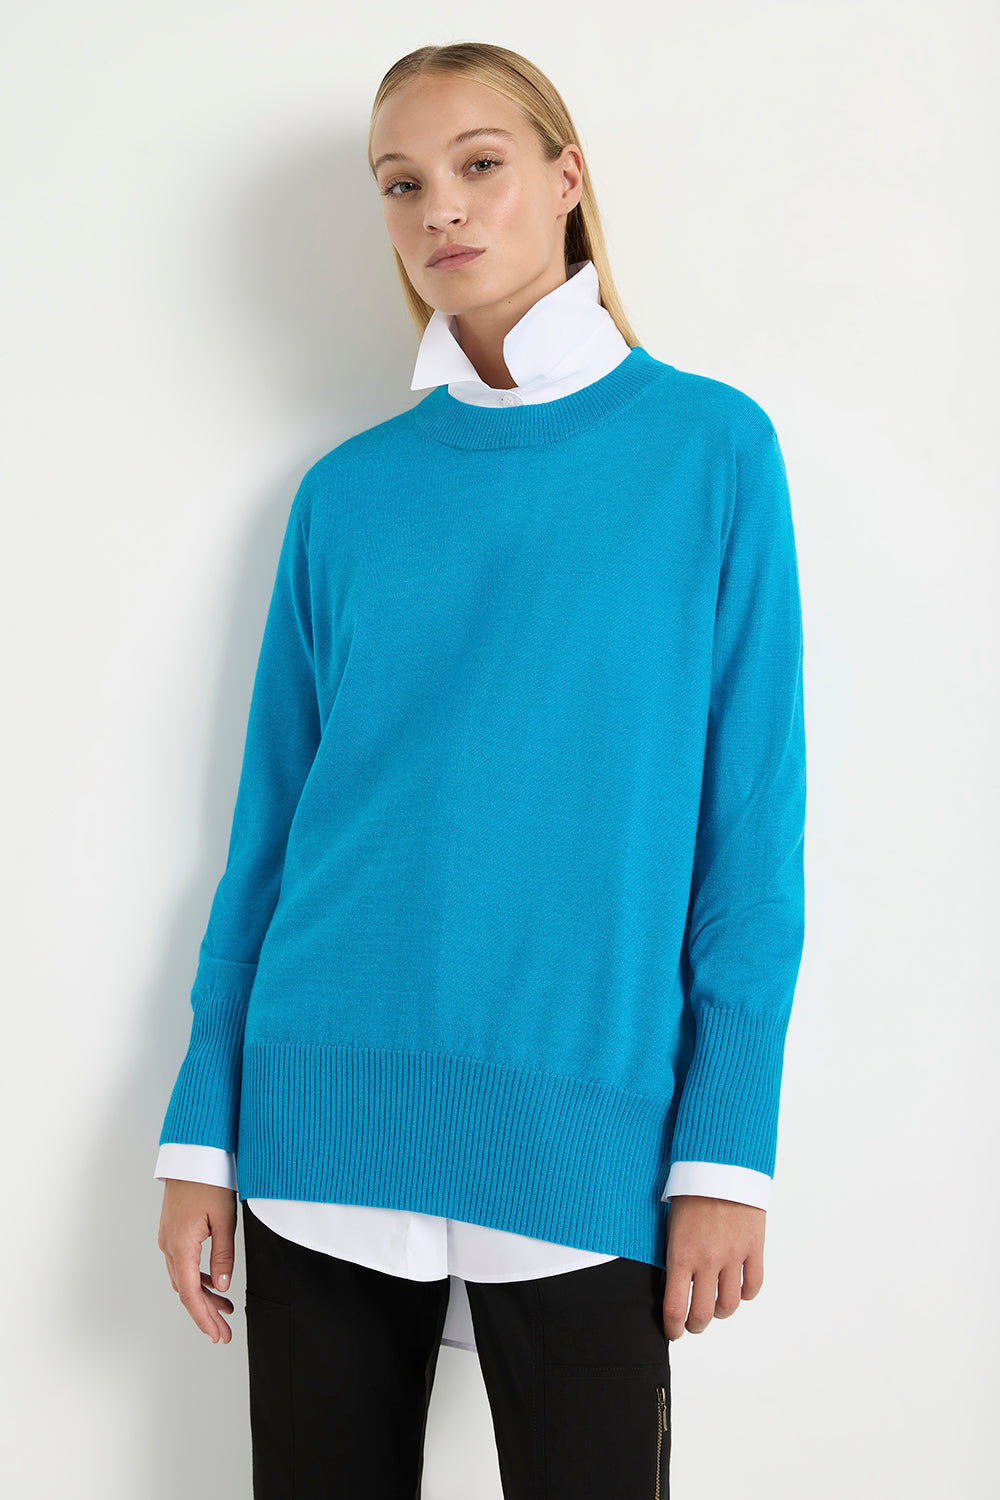 Mela Purdie Pace Sweater in Jewel F13 9290